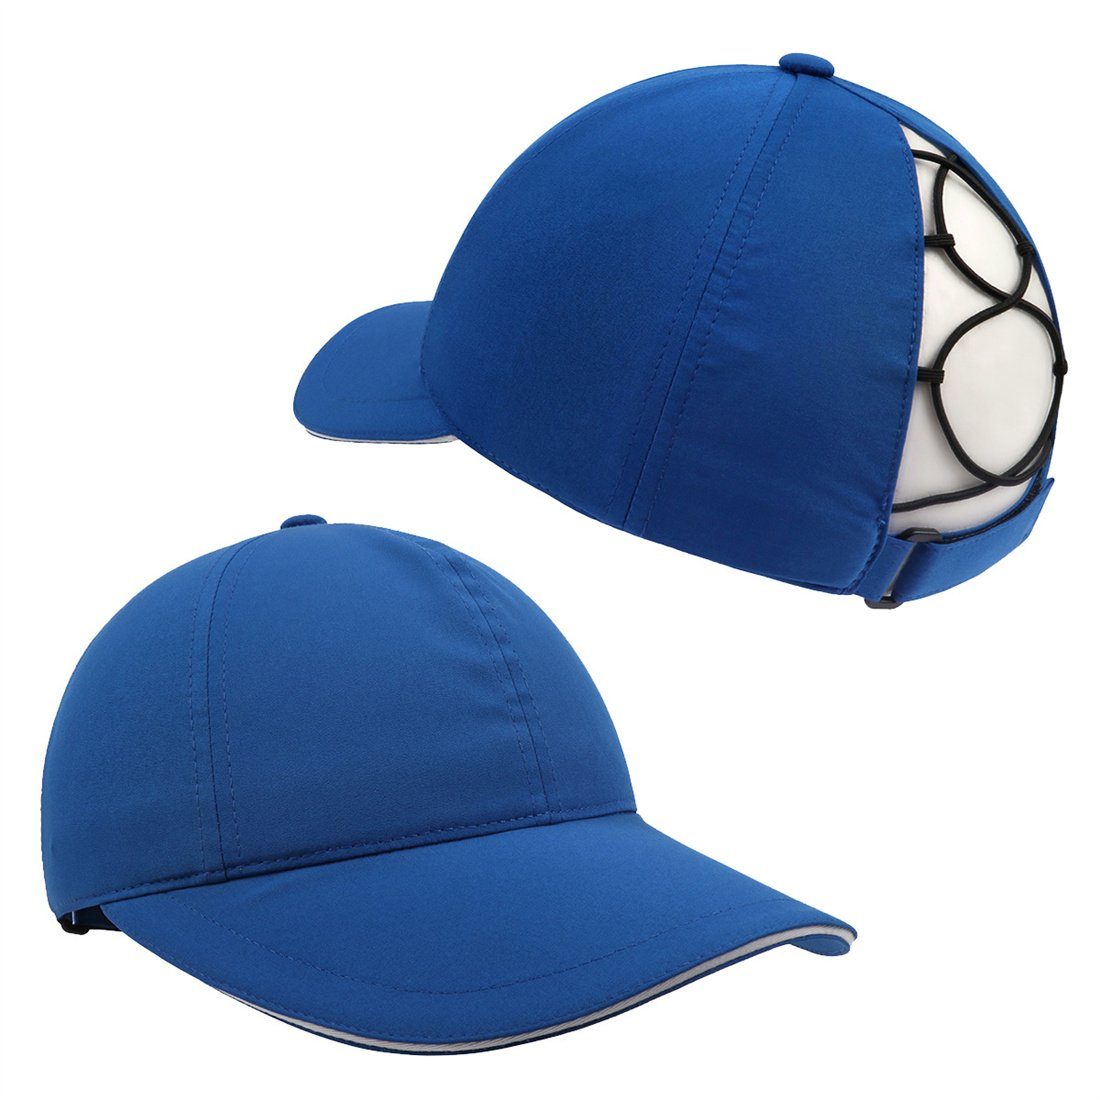 Outdoor-Baseballkappe Kappe,Sonnenblende trocknende Cap für blau Baseball DÖRÖY Frauen,schnell